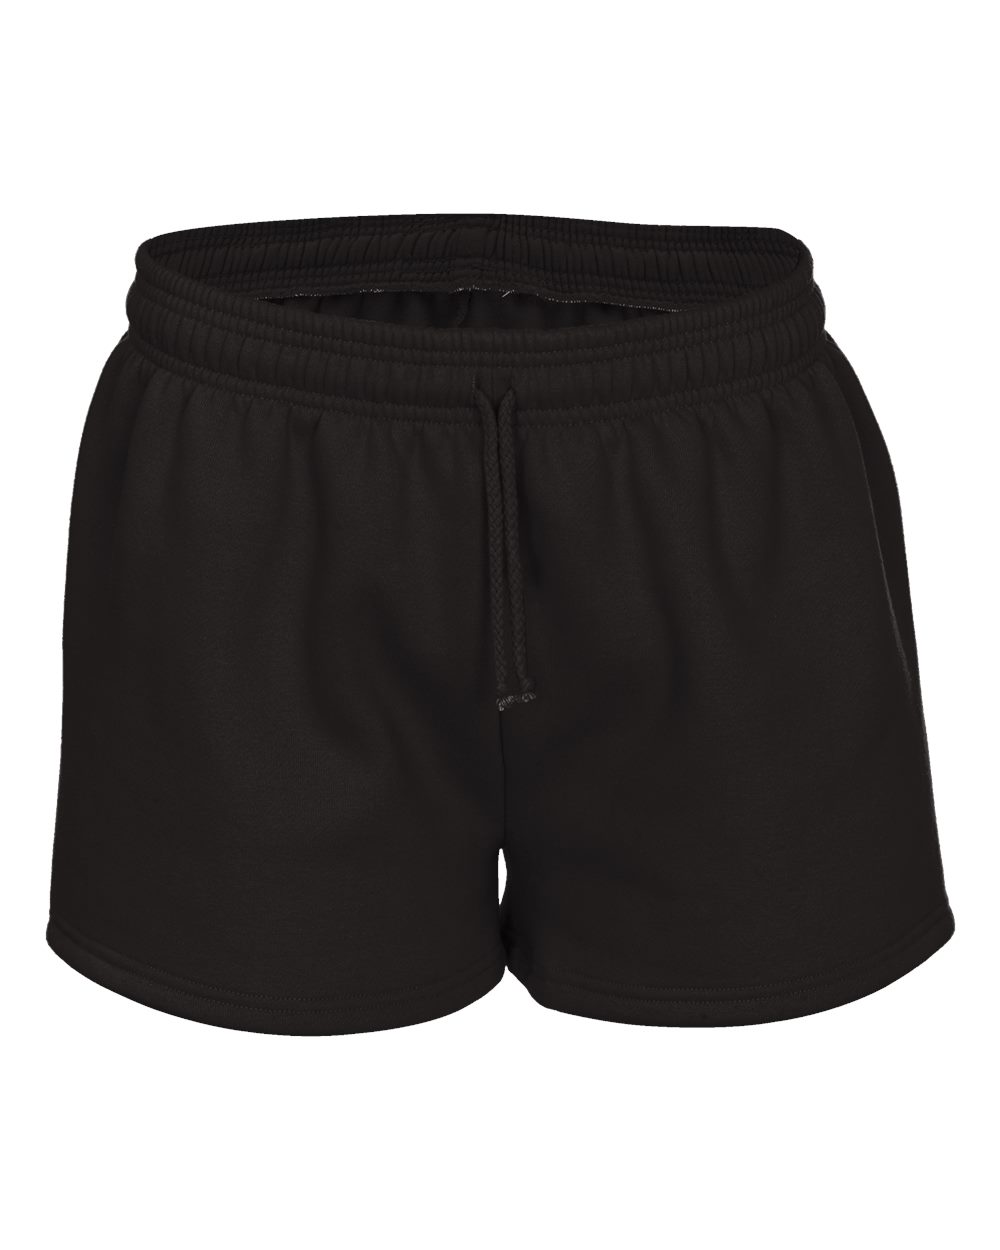 Badger Sport 1203 - Women's Athletic Fleece Shorts